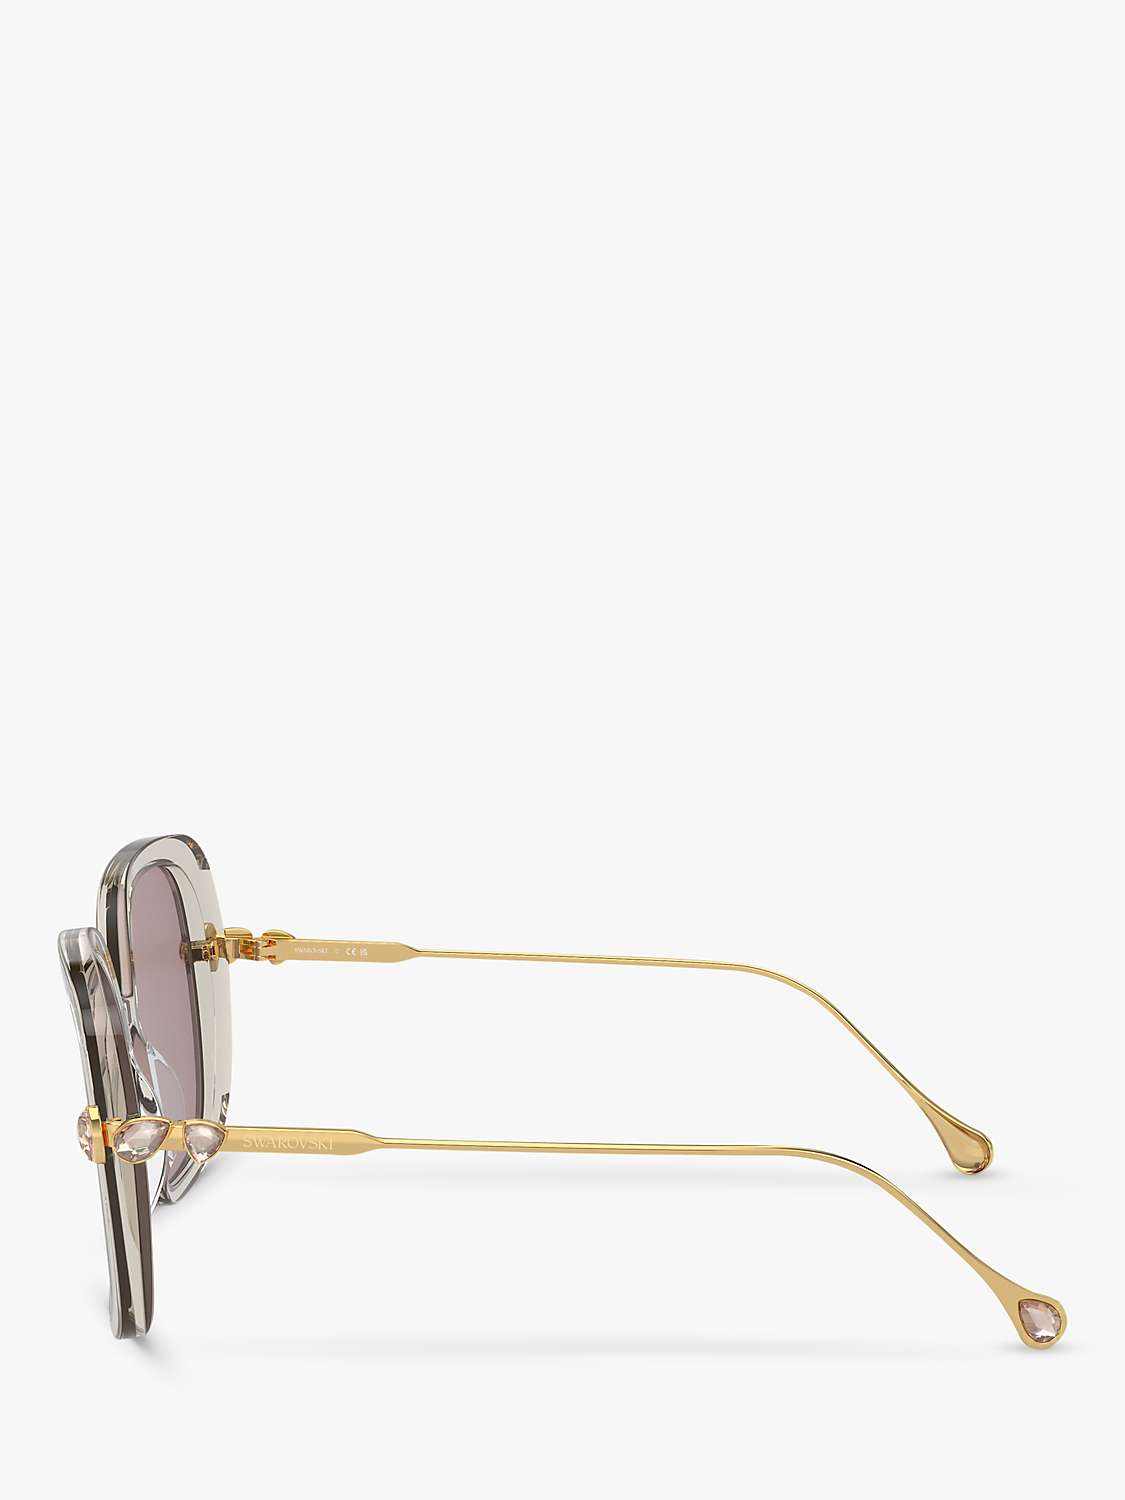 Buy Swarovski SK6011 Women's Square Sunglasses Online at johnlewis.com